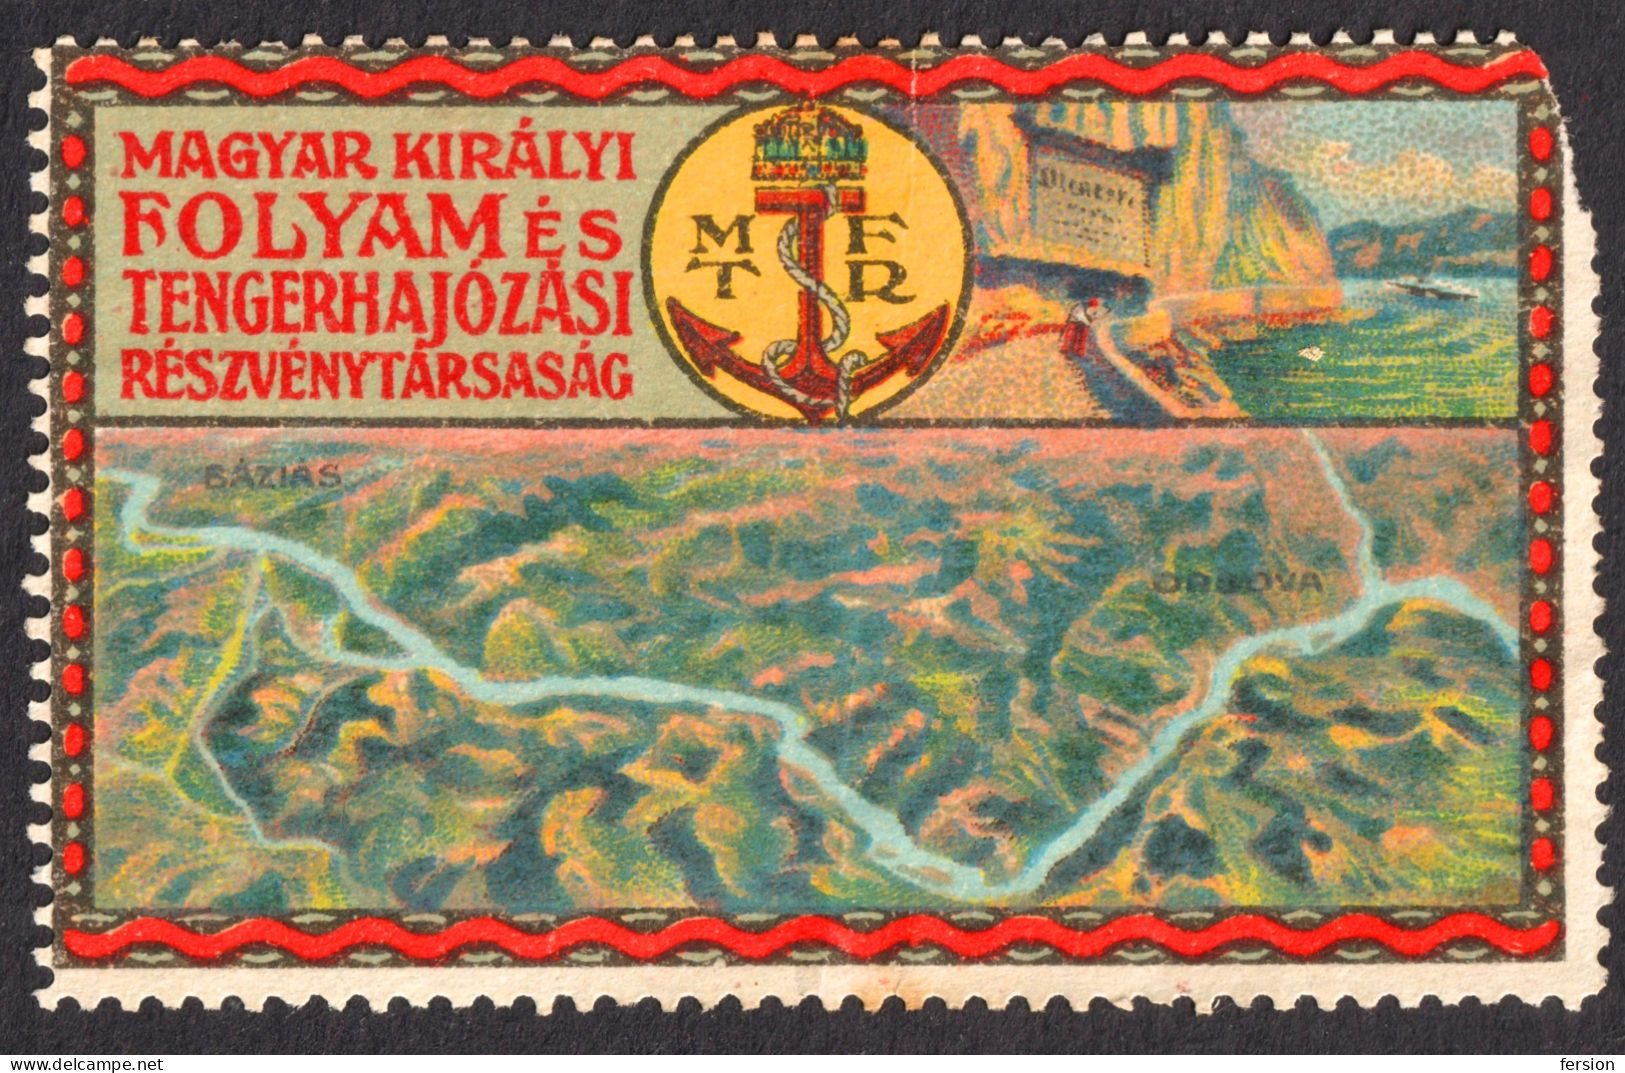 Iron Gates DANUBE Steamer River Transylvania HUNGARY Romania Serbia MAP 1910 Orsova Báziás VIGNETTE LABEL CINDERELLA - Transsylvanië